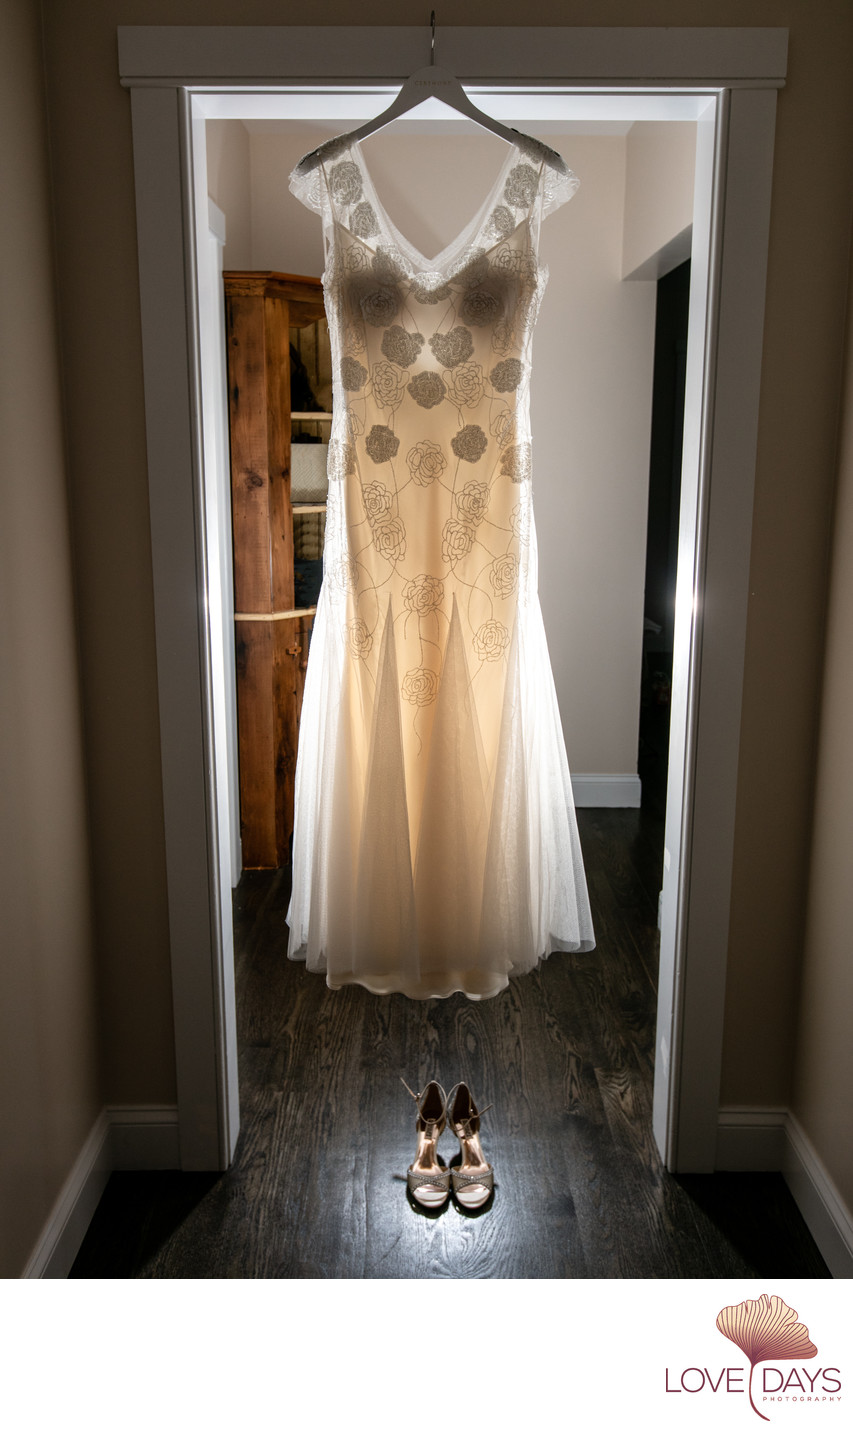 Merediths stunning Chatham Wedding Dress